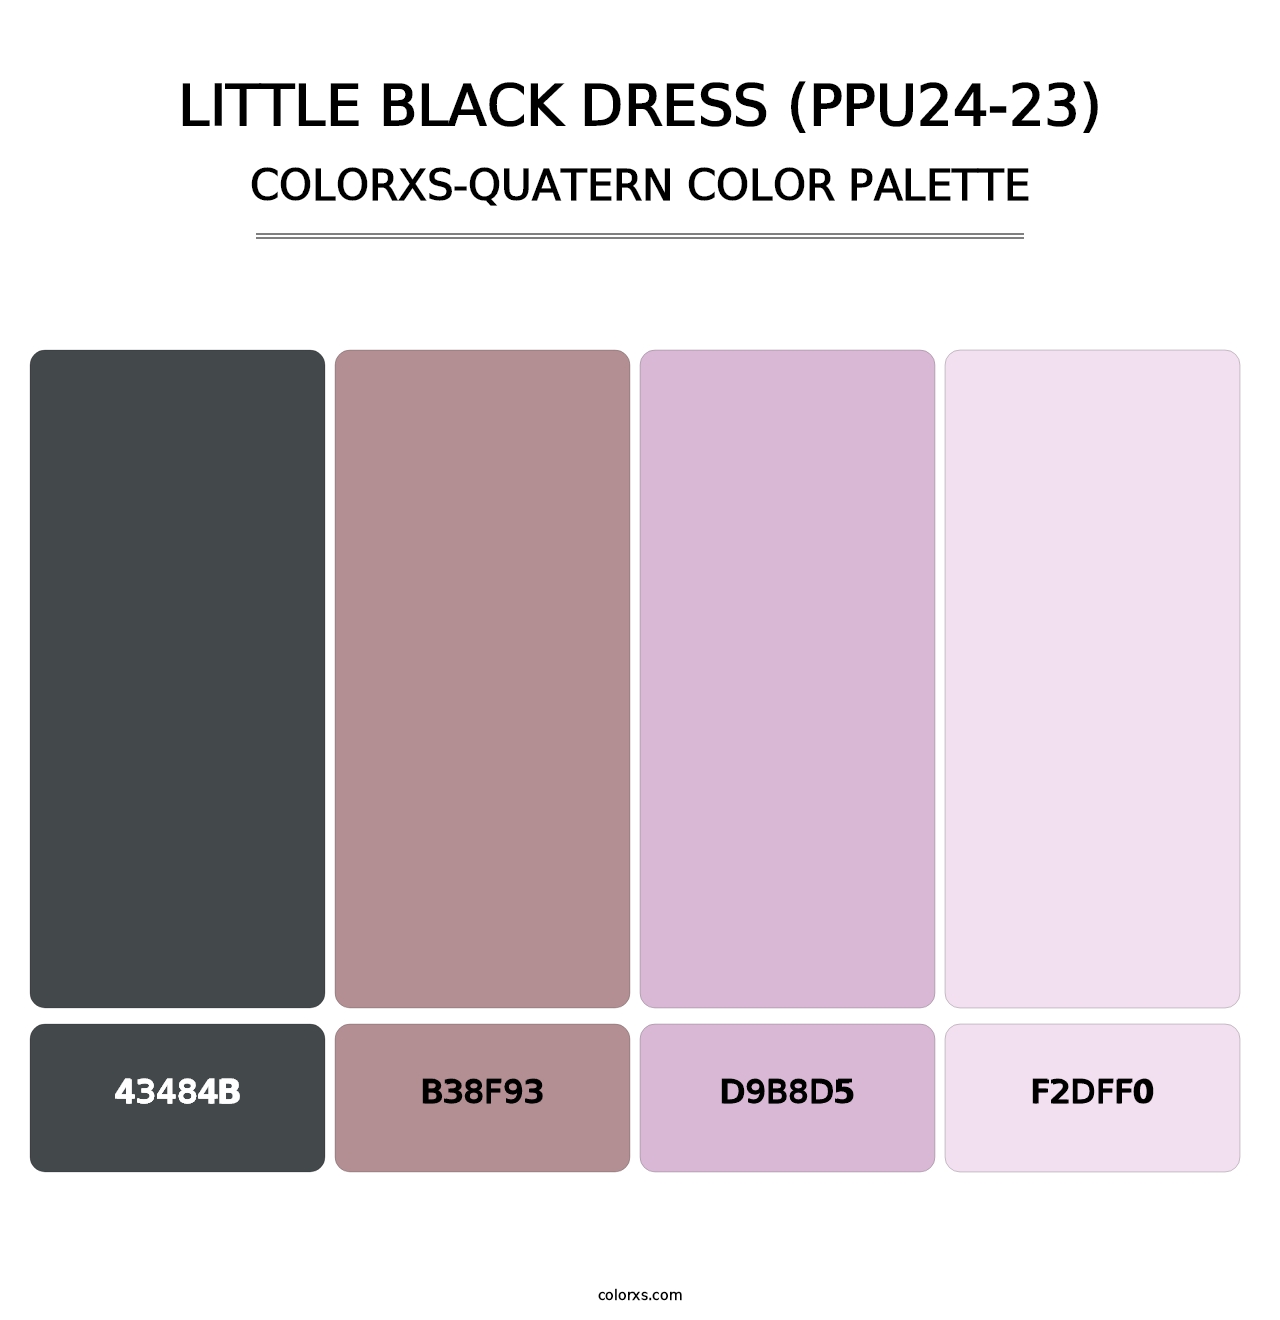 Little Black Dress (PPU24-23) - Colorxs Quatern Palette